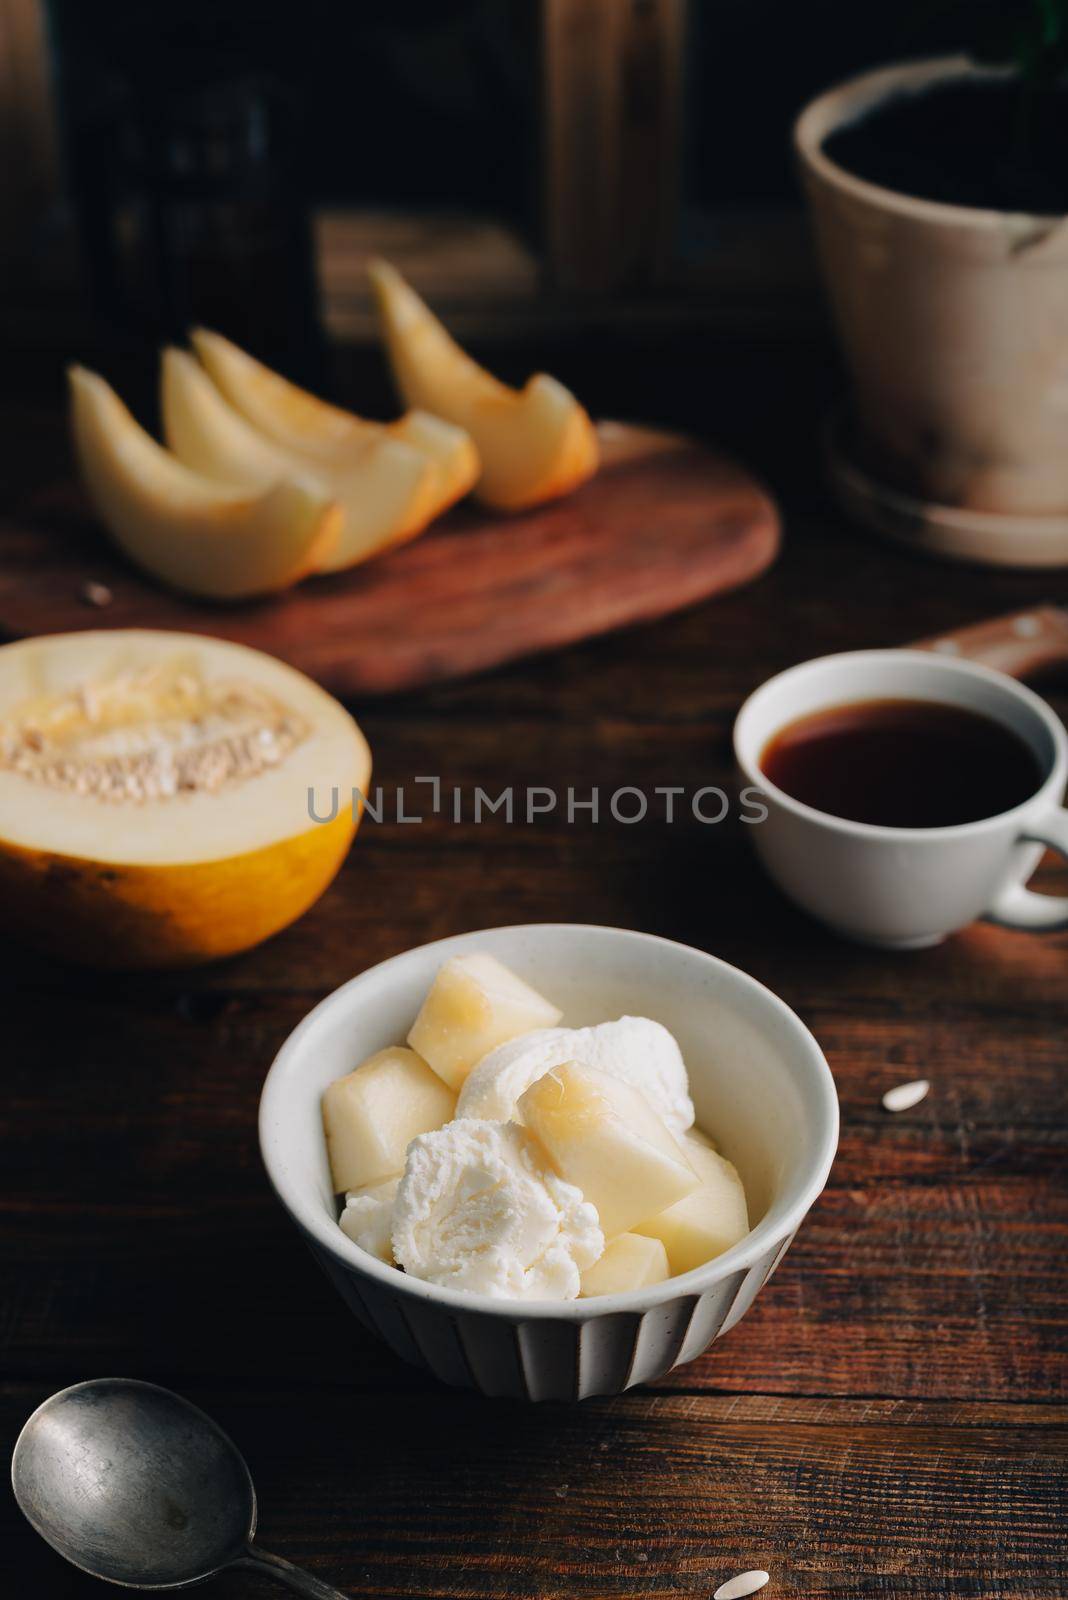 Vanilla Ice Cream with Honeydew Melon Slices by Seva_blsv